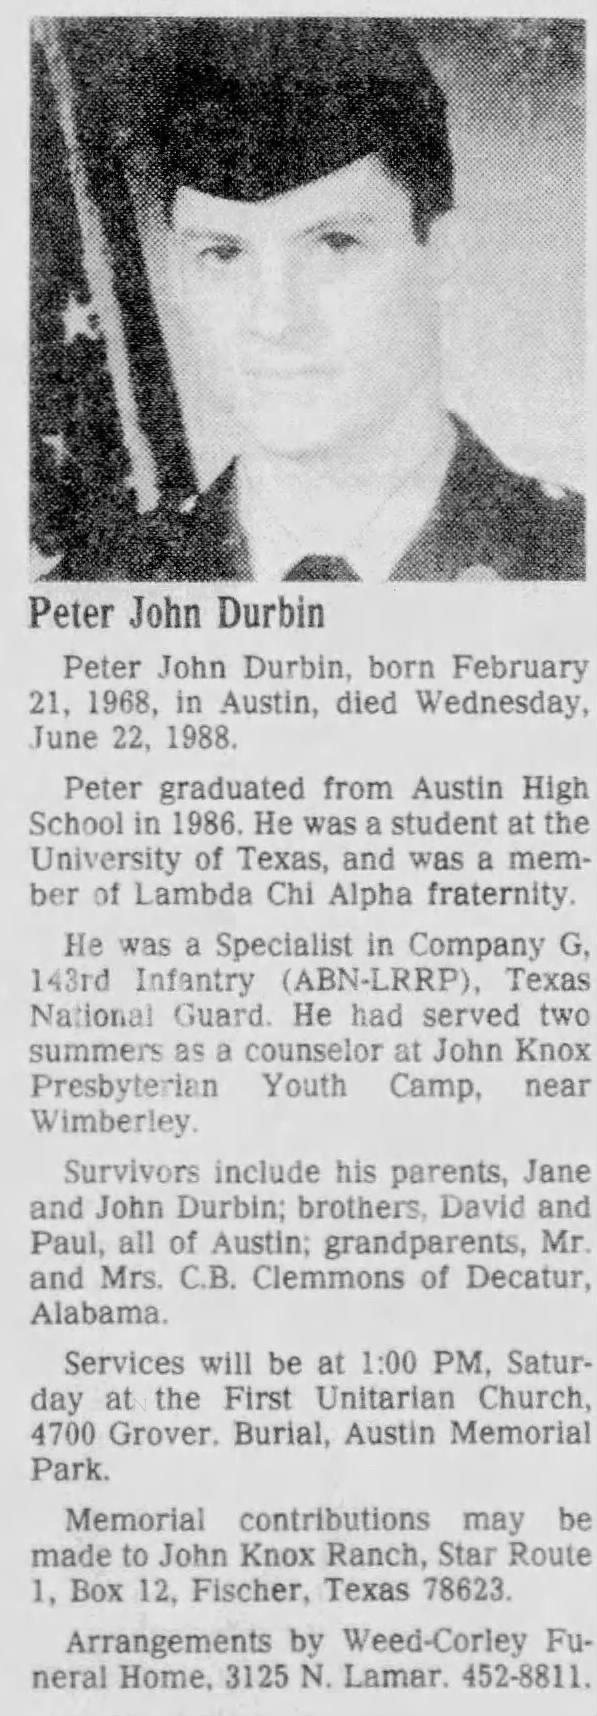 Death of Peter John Durbin June 22, 1988.